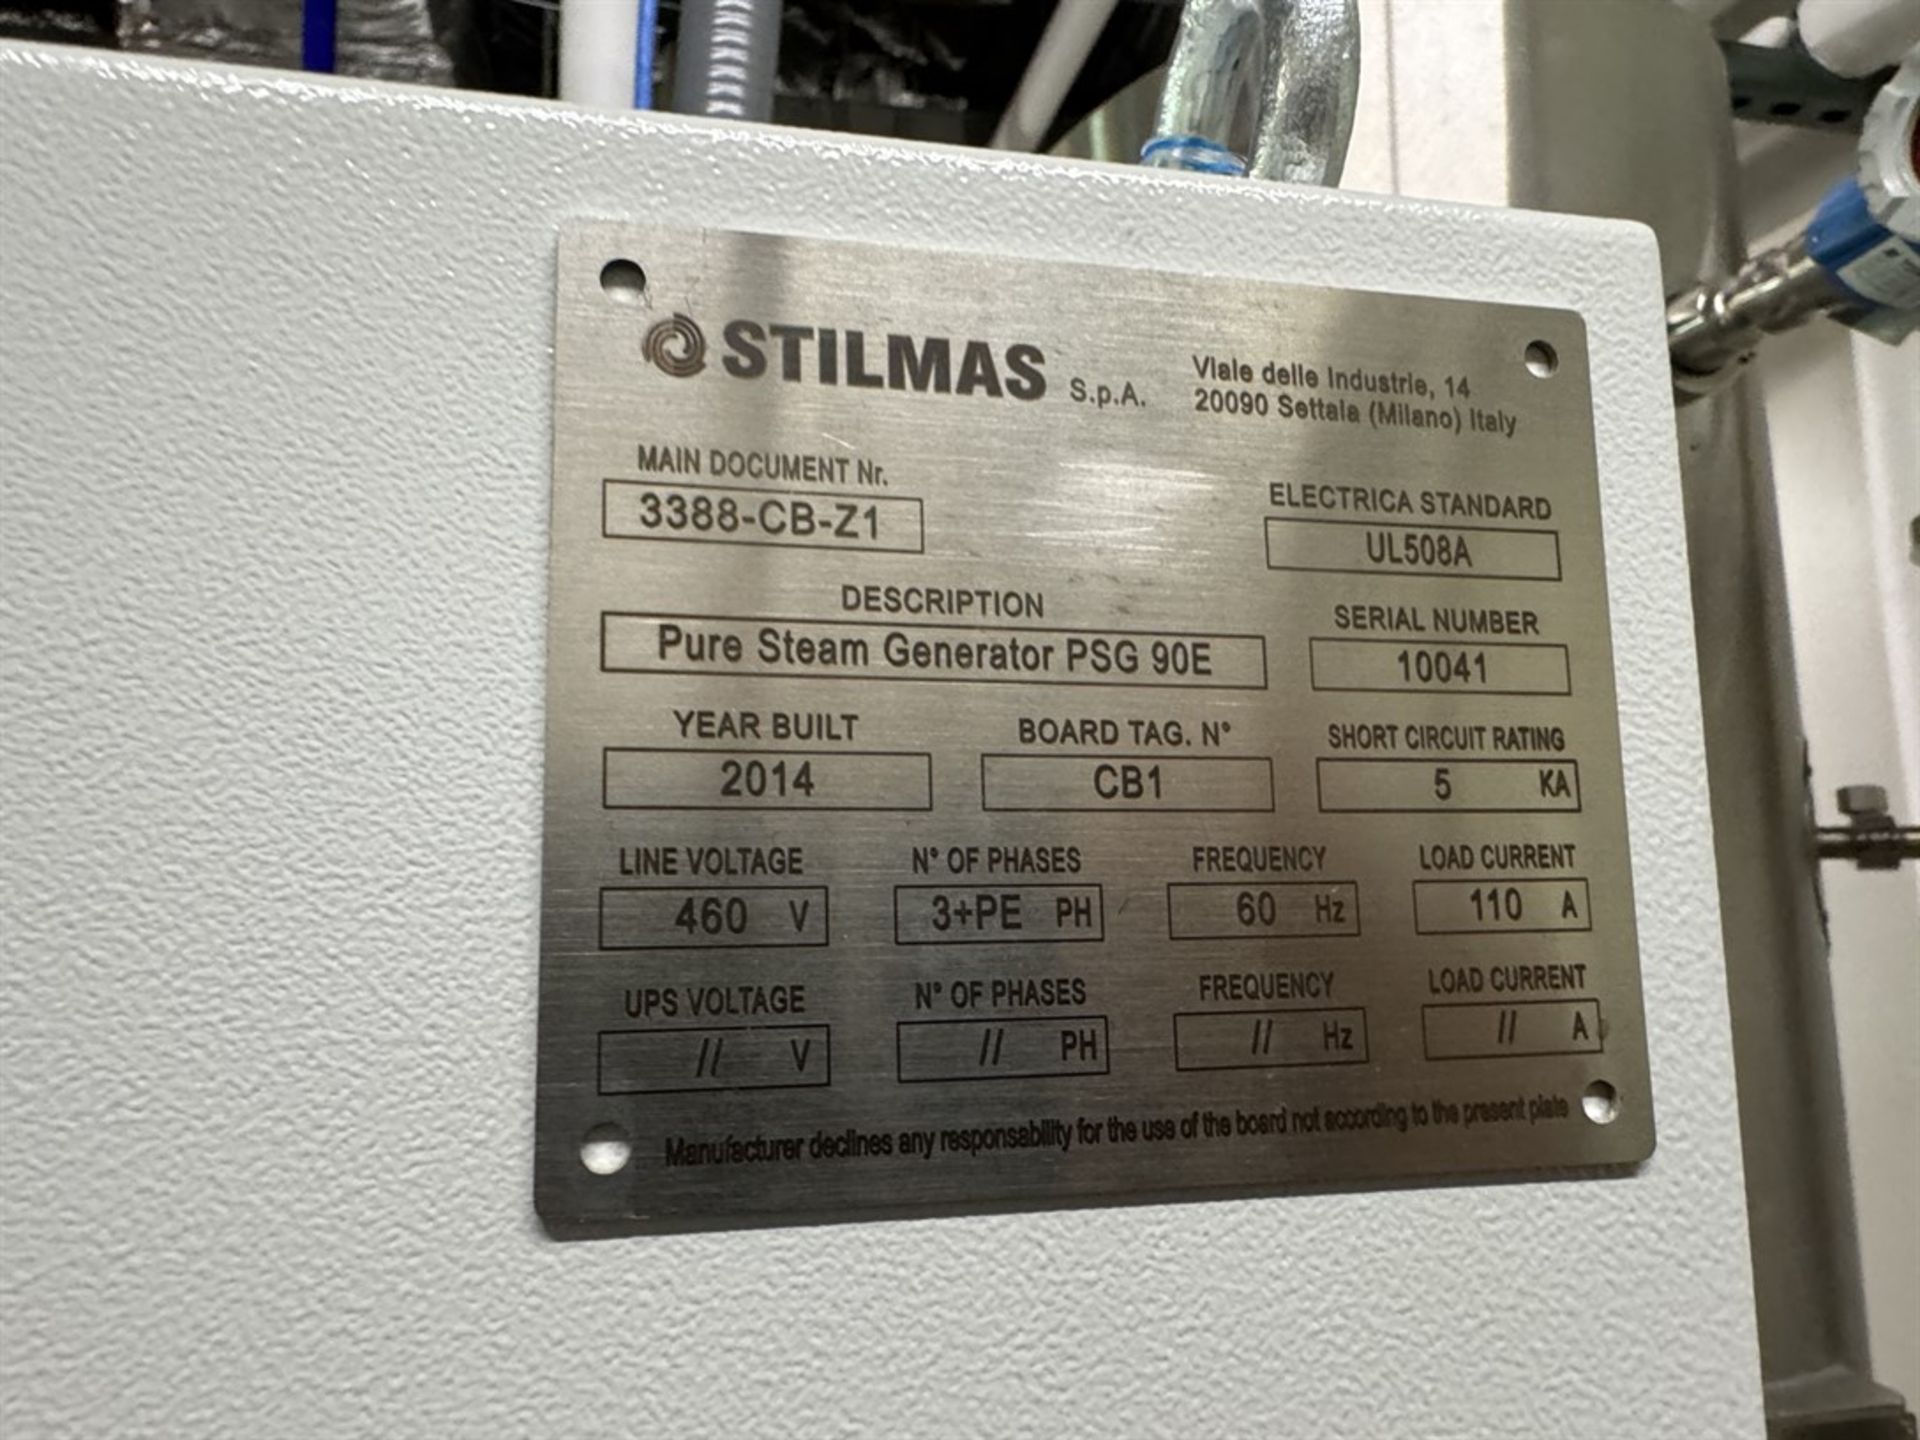 2014 STILMAS Pure Steam Generator PSG 90E, s/n 10041 - Image 4 of 10